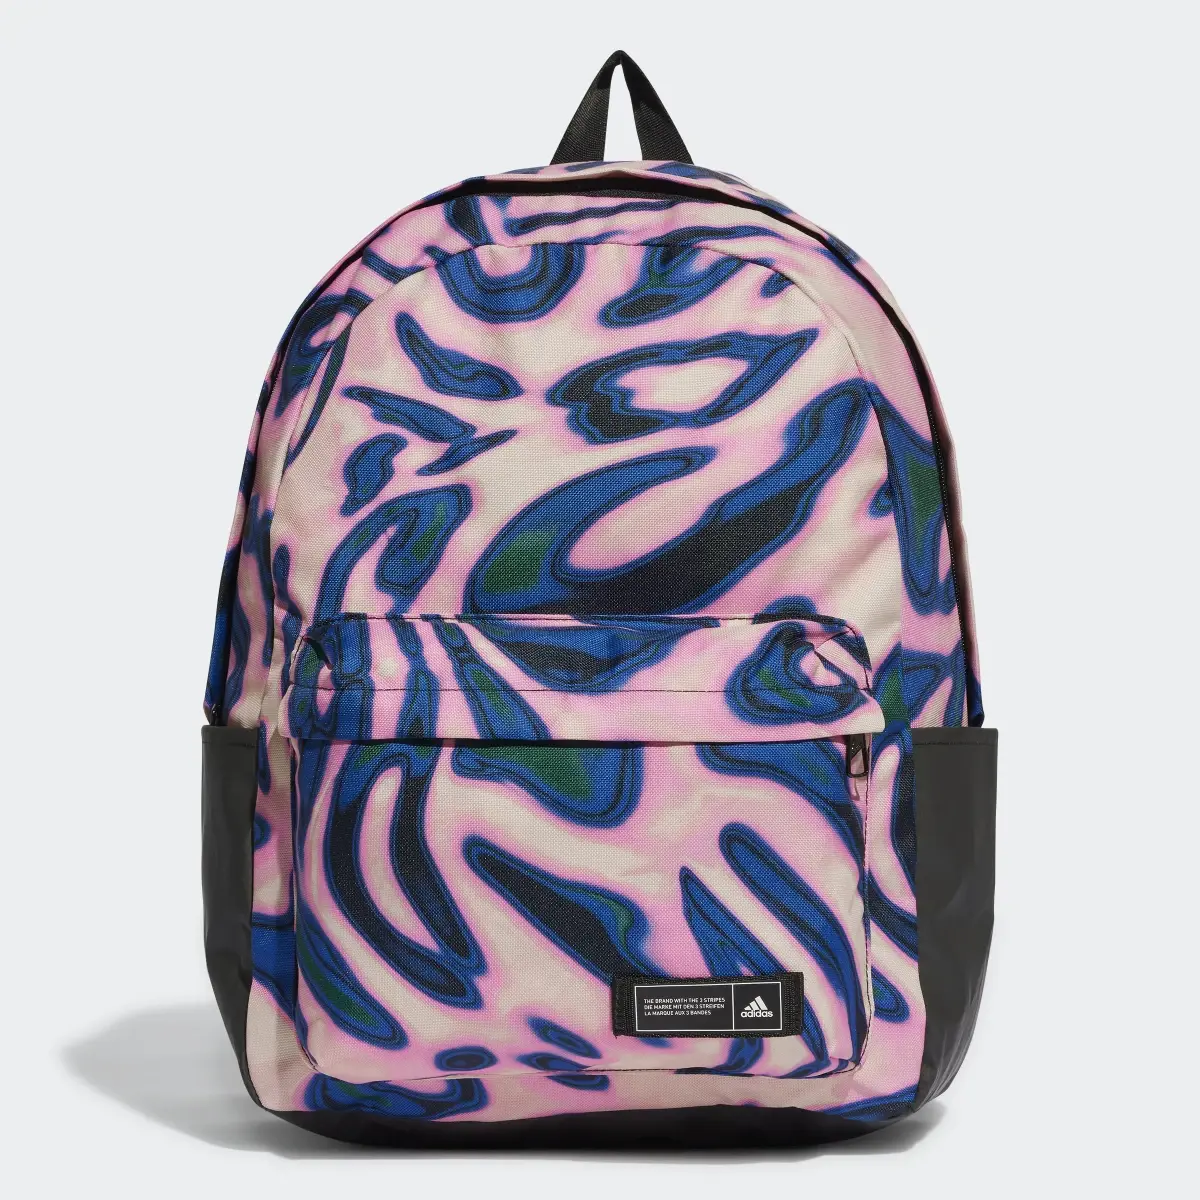 Adidas Classic Animal-Print Backpack. 2